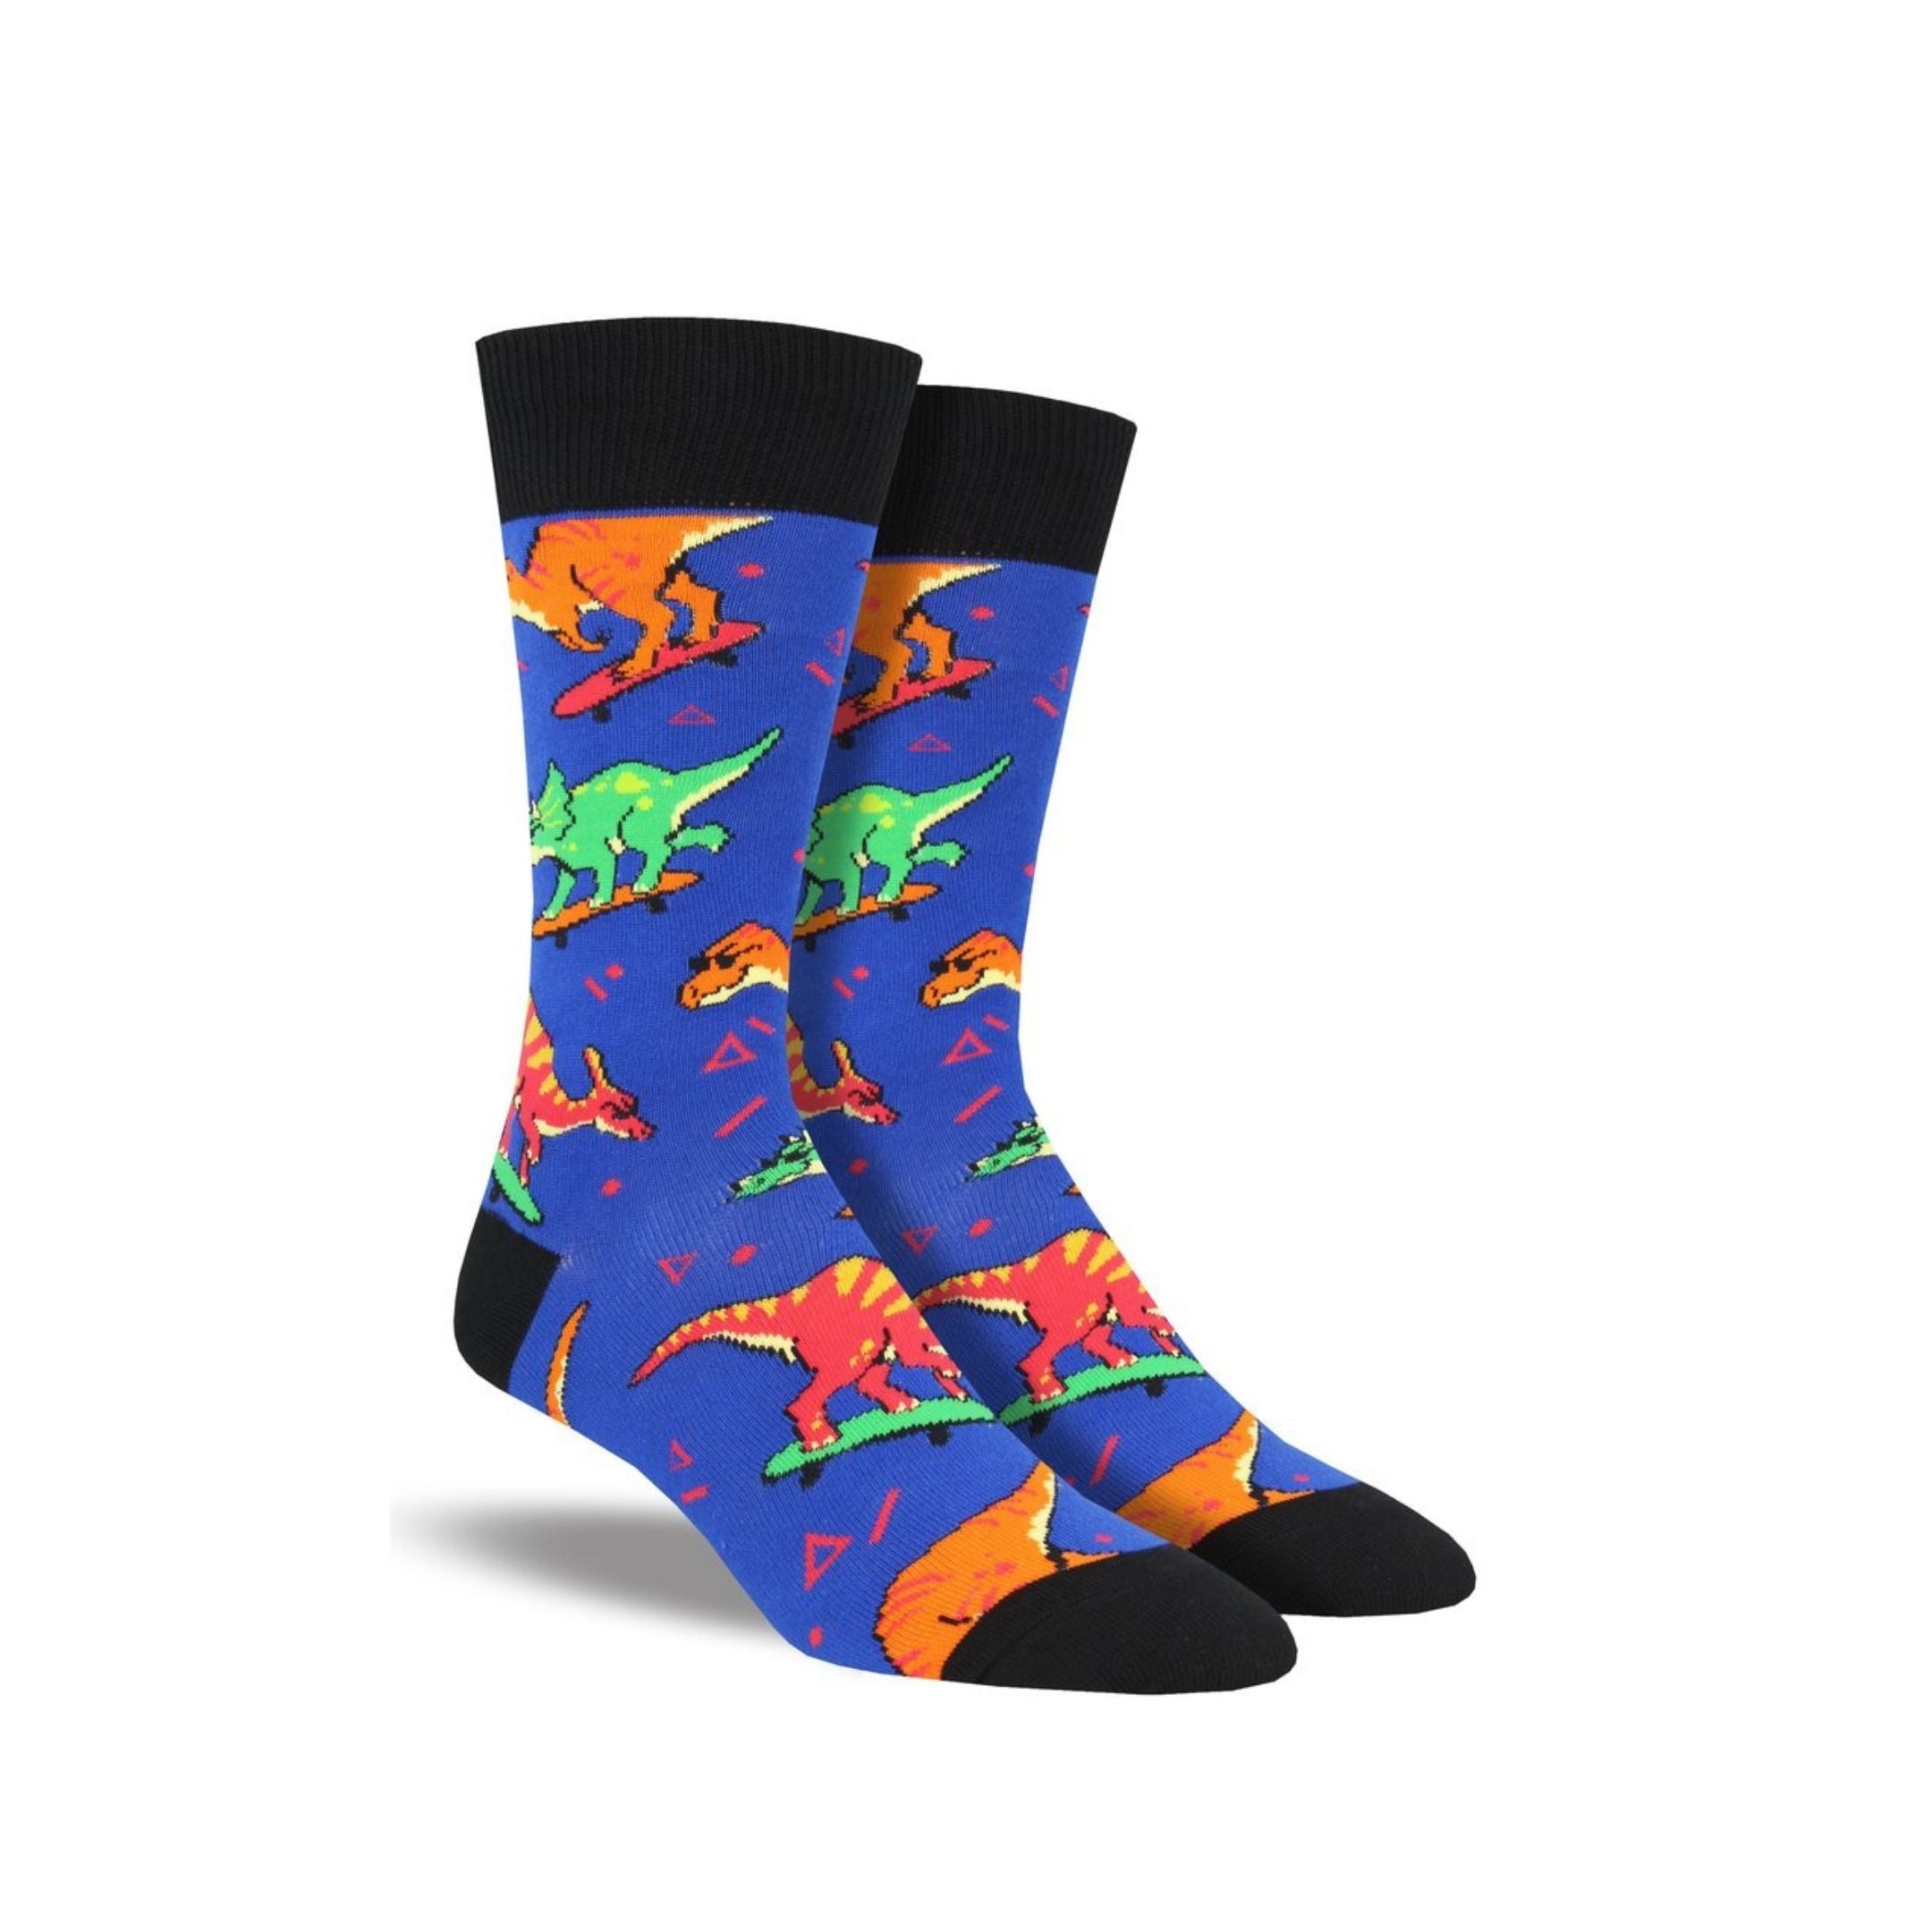 Blue socks with skateboarding dinosaurs on it